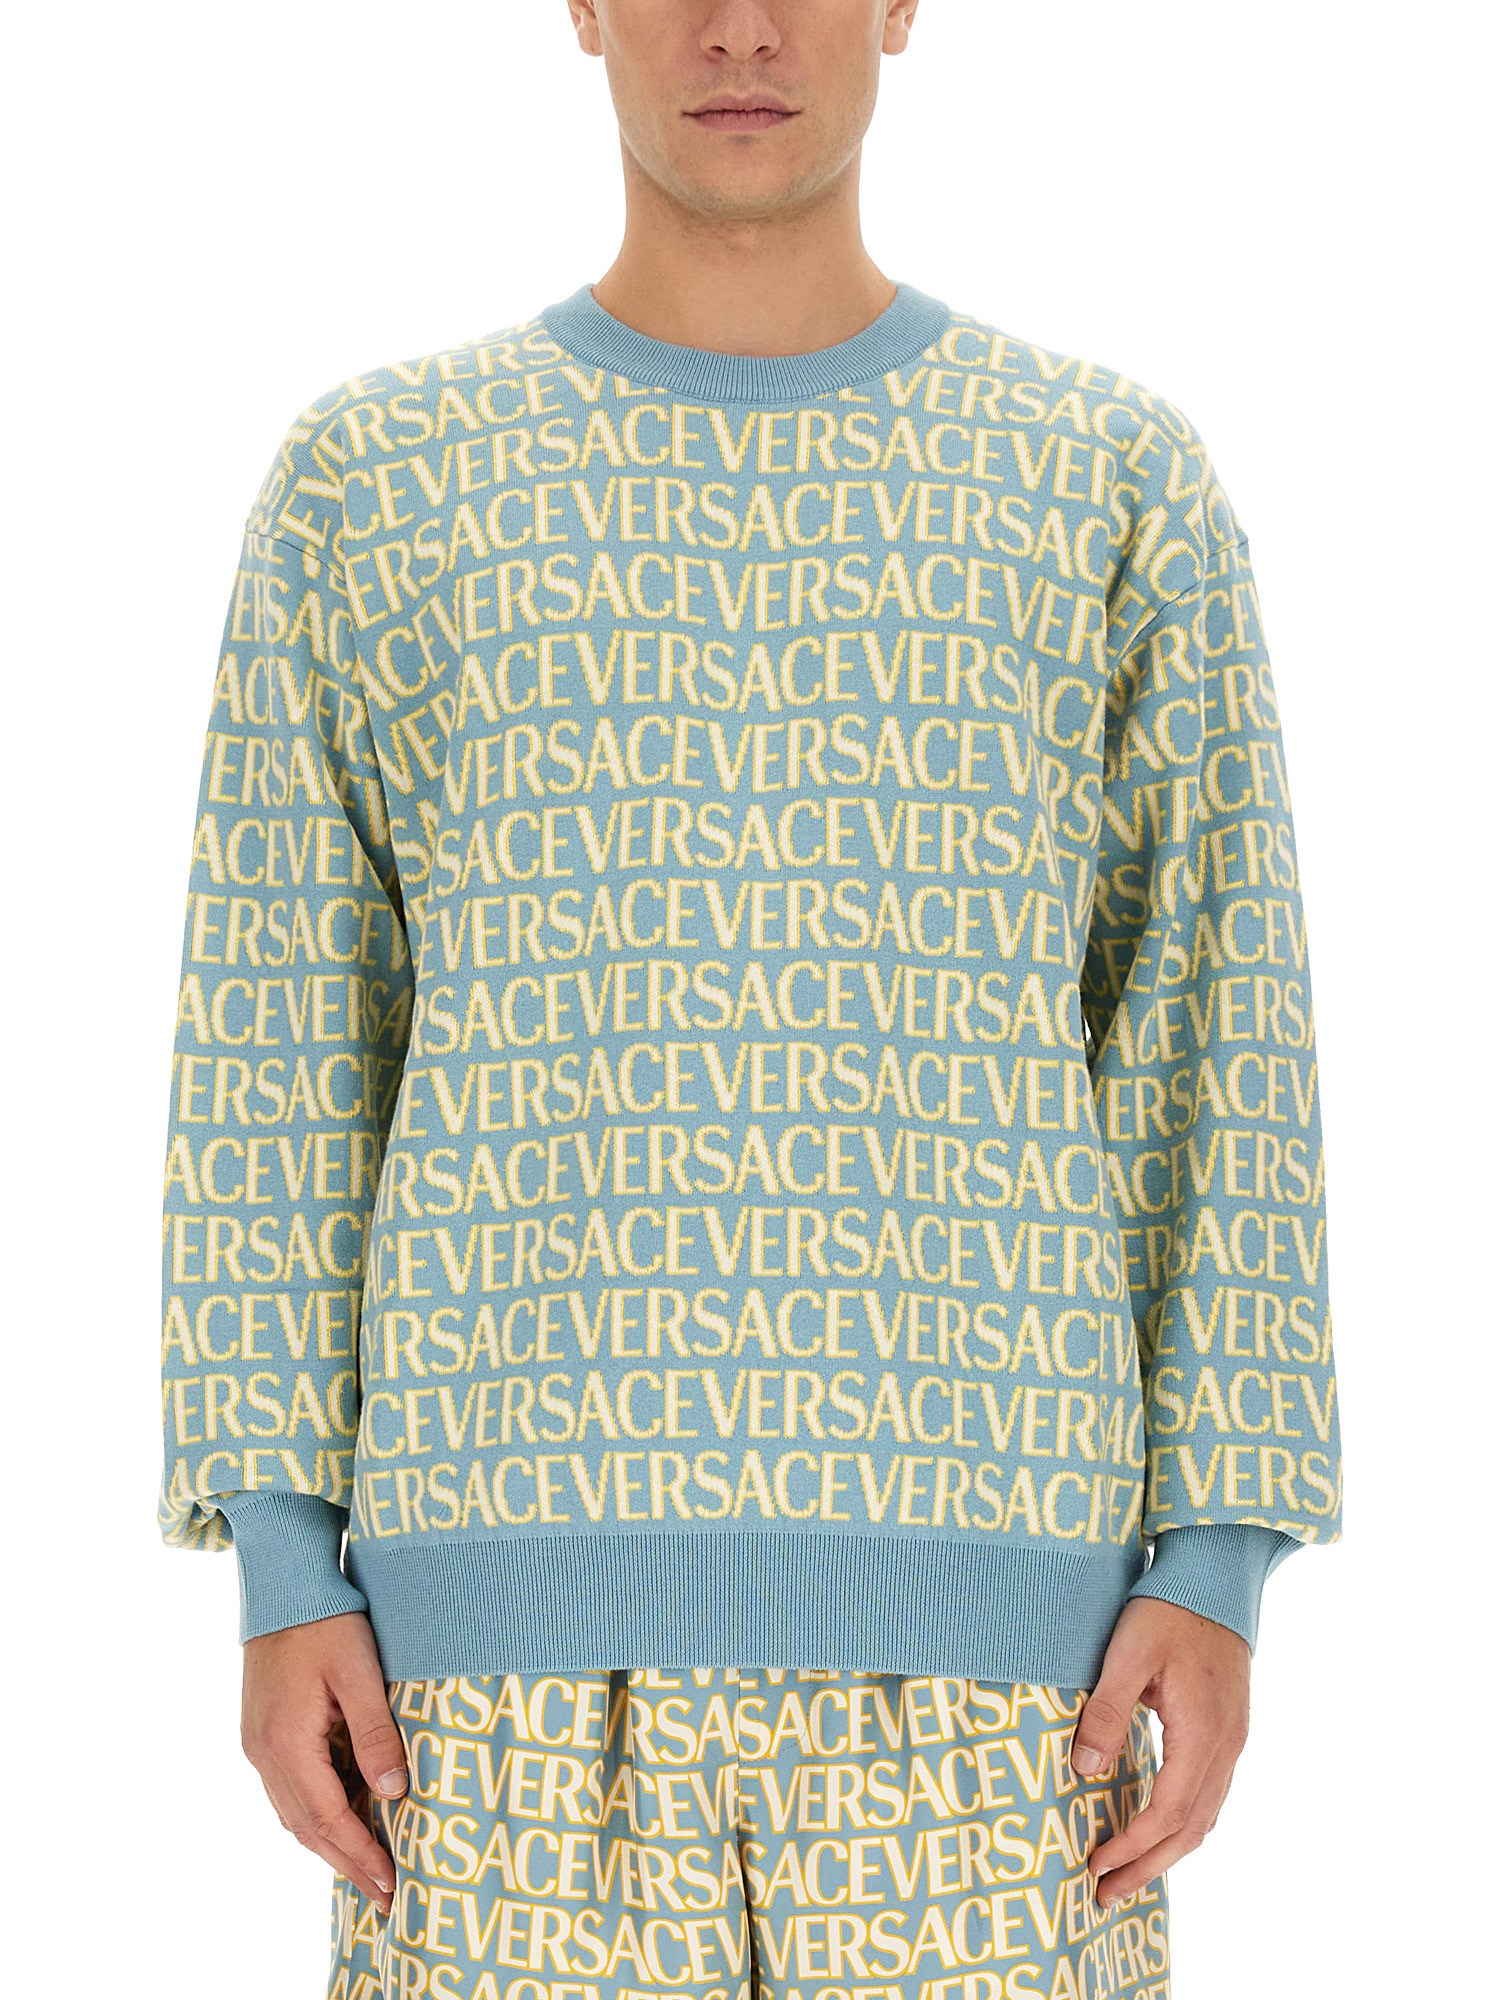 Versace versace allover logo jersey